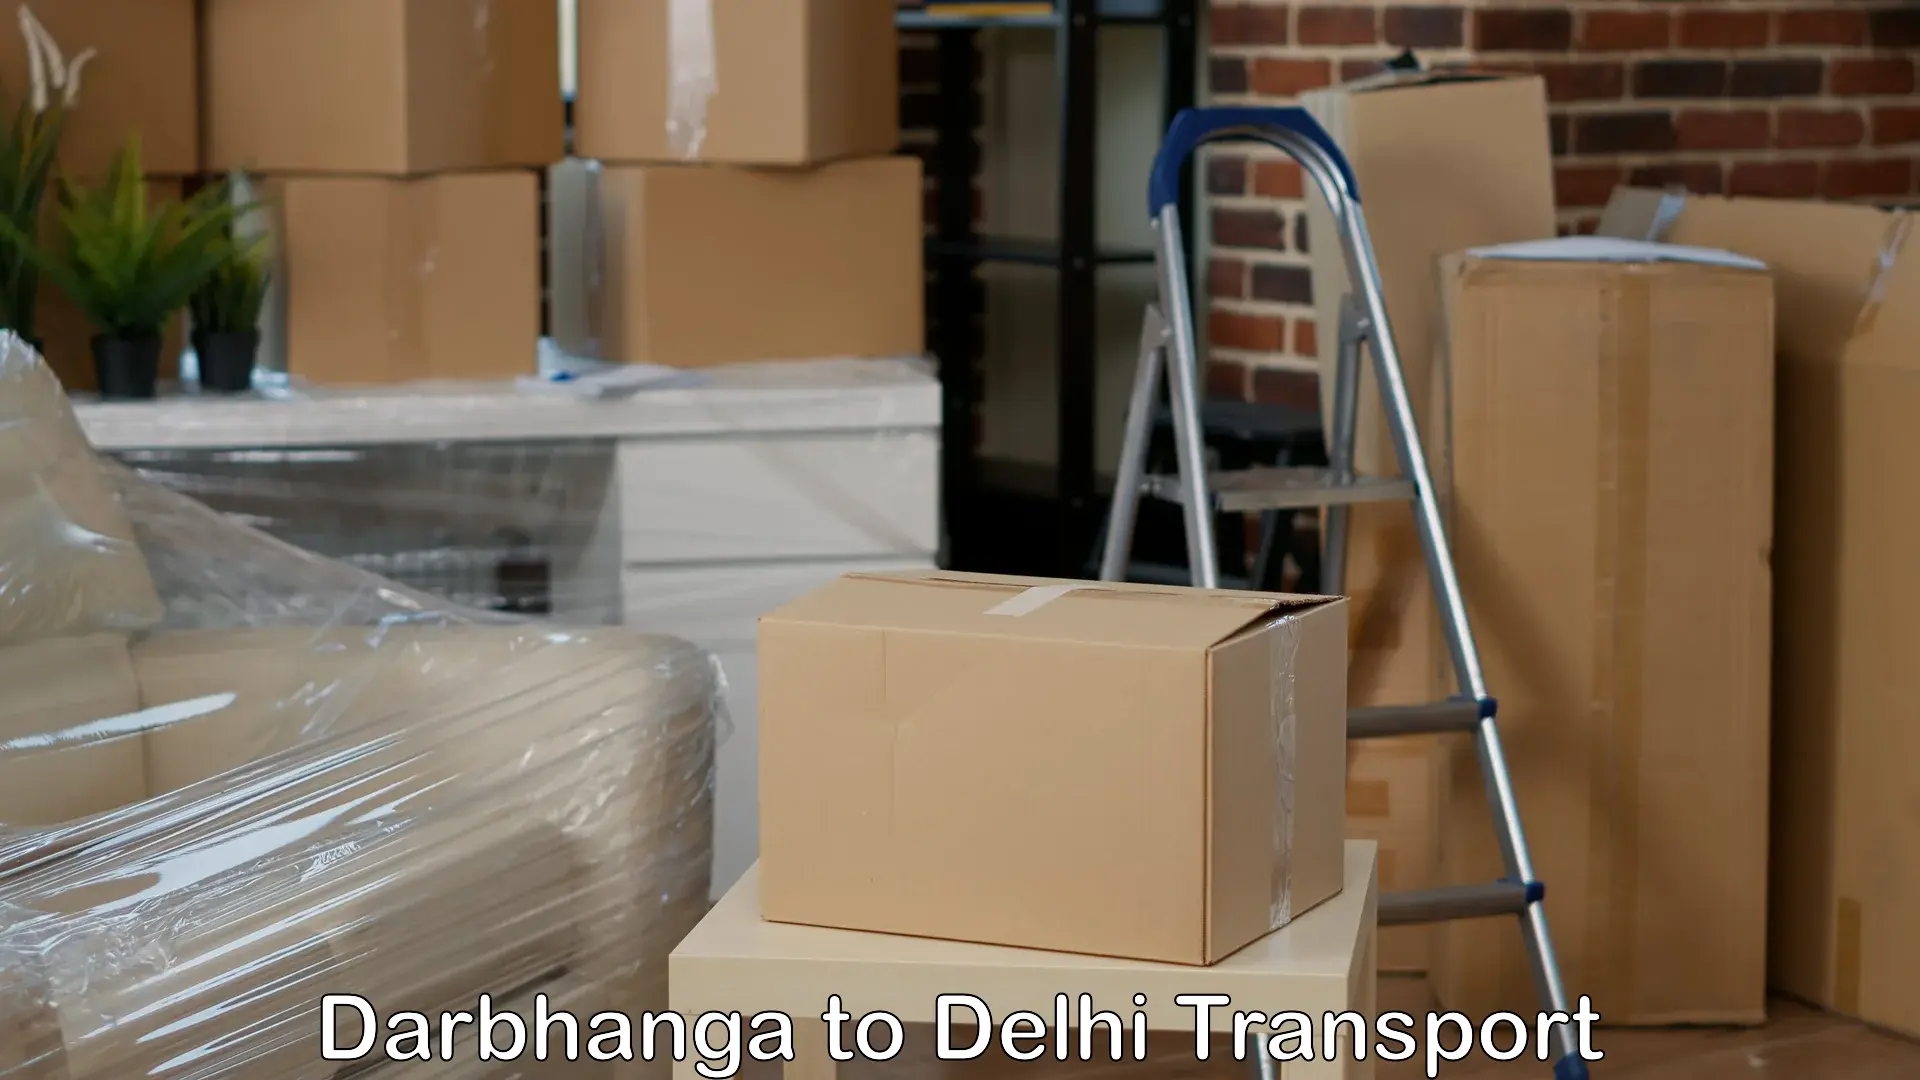 Truck transport companies in India Darbhanga to East Delhi